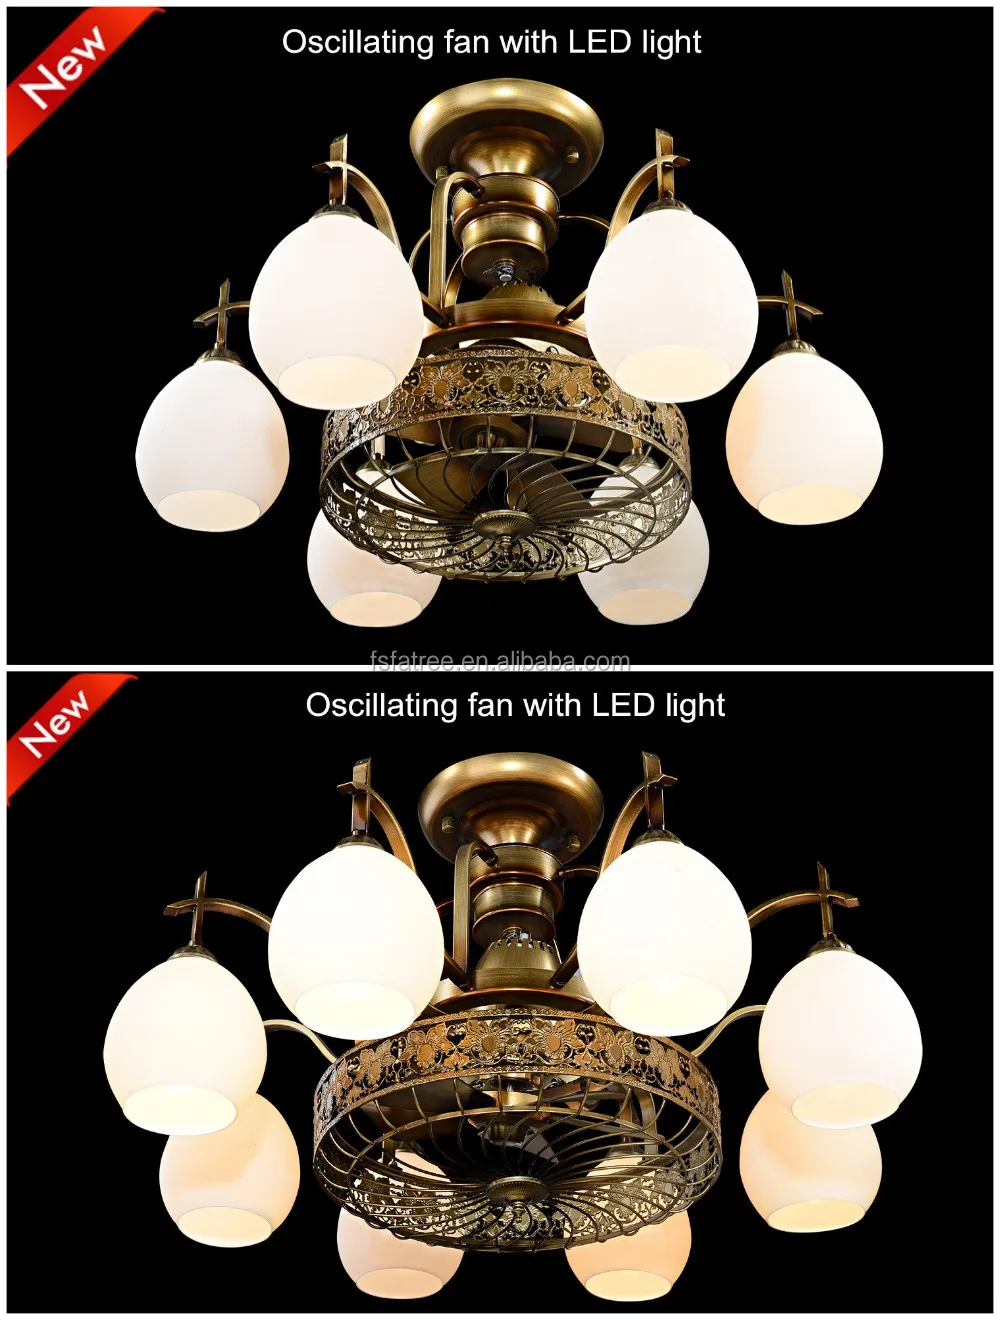 New homestead decorative Elecrtic Orbit Fan with led light